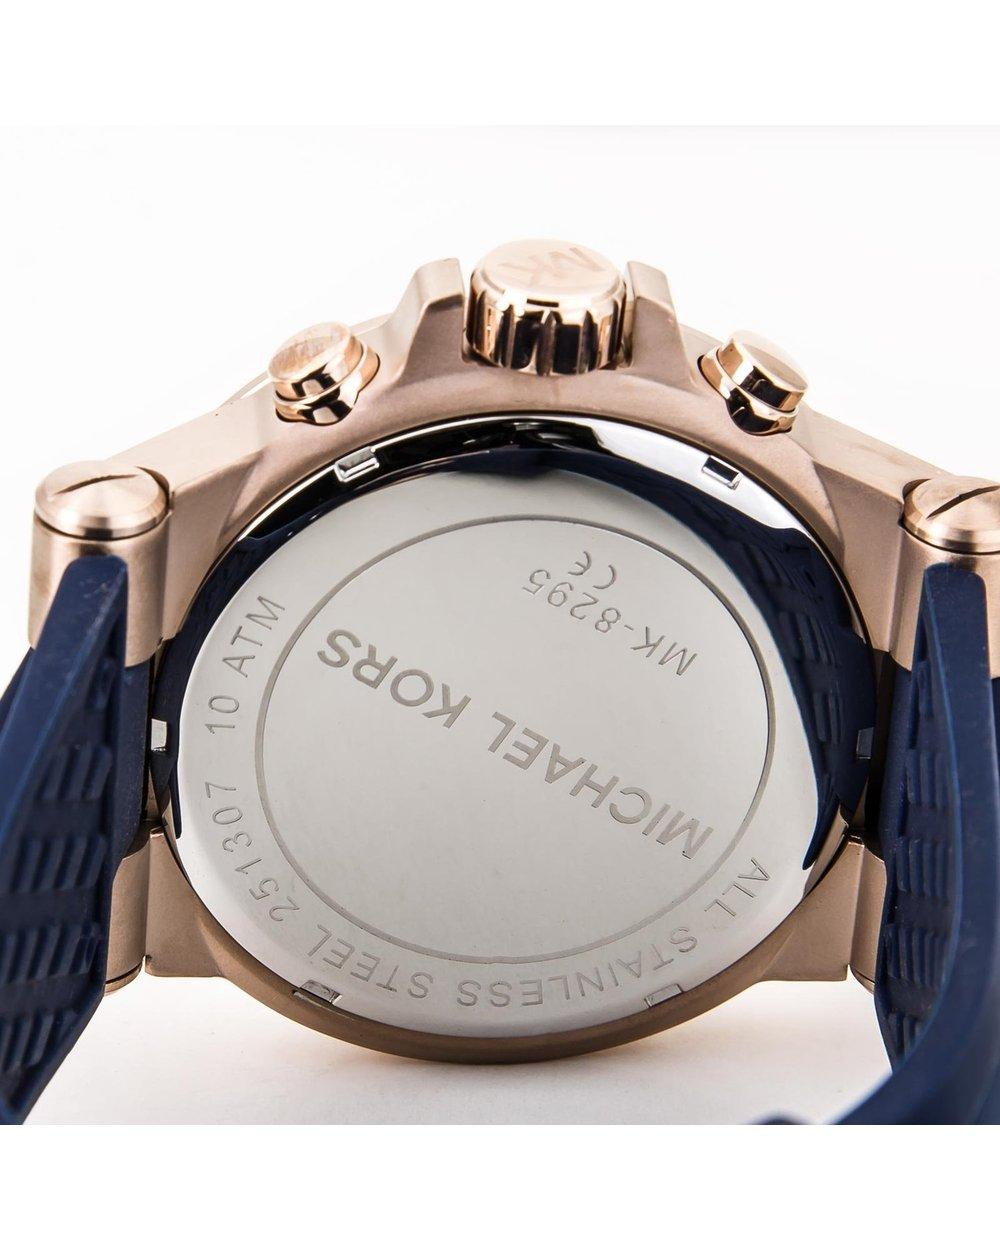 Michael Kors MK8295 Stainless Steel Wrist Watch for Men